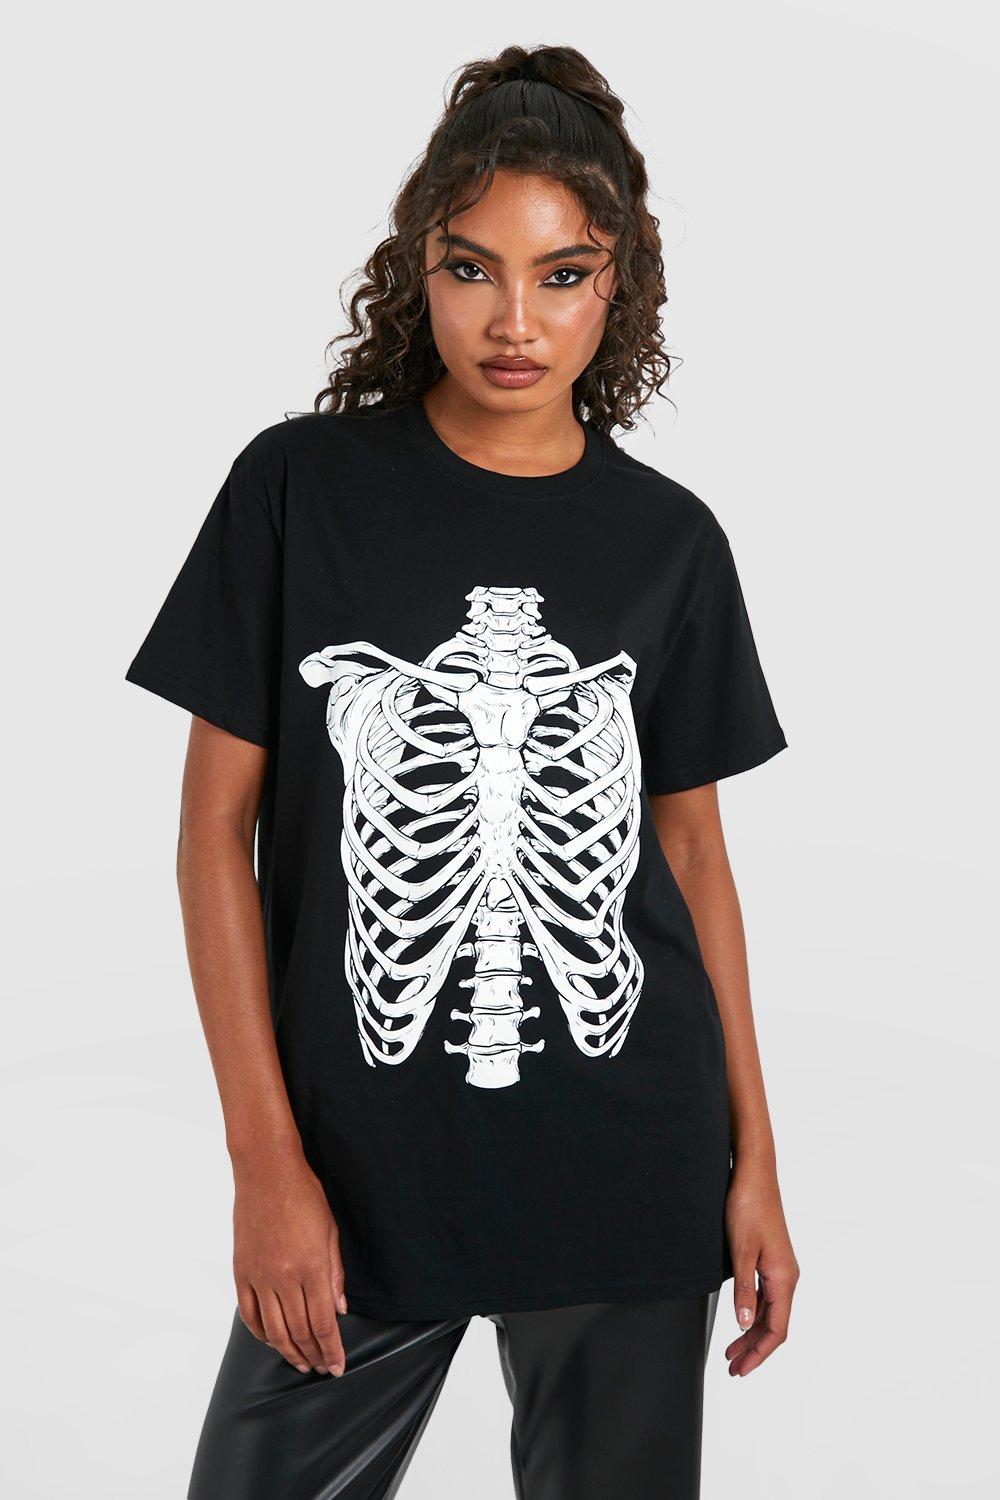 Mens White Skeleton Rib Cage Funny Halloween Costume T shirt